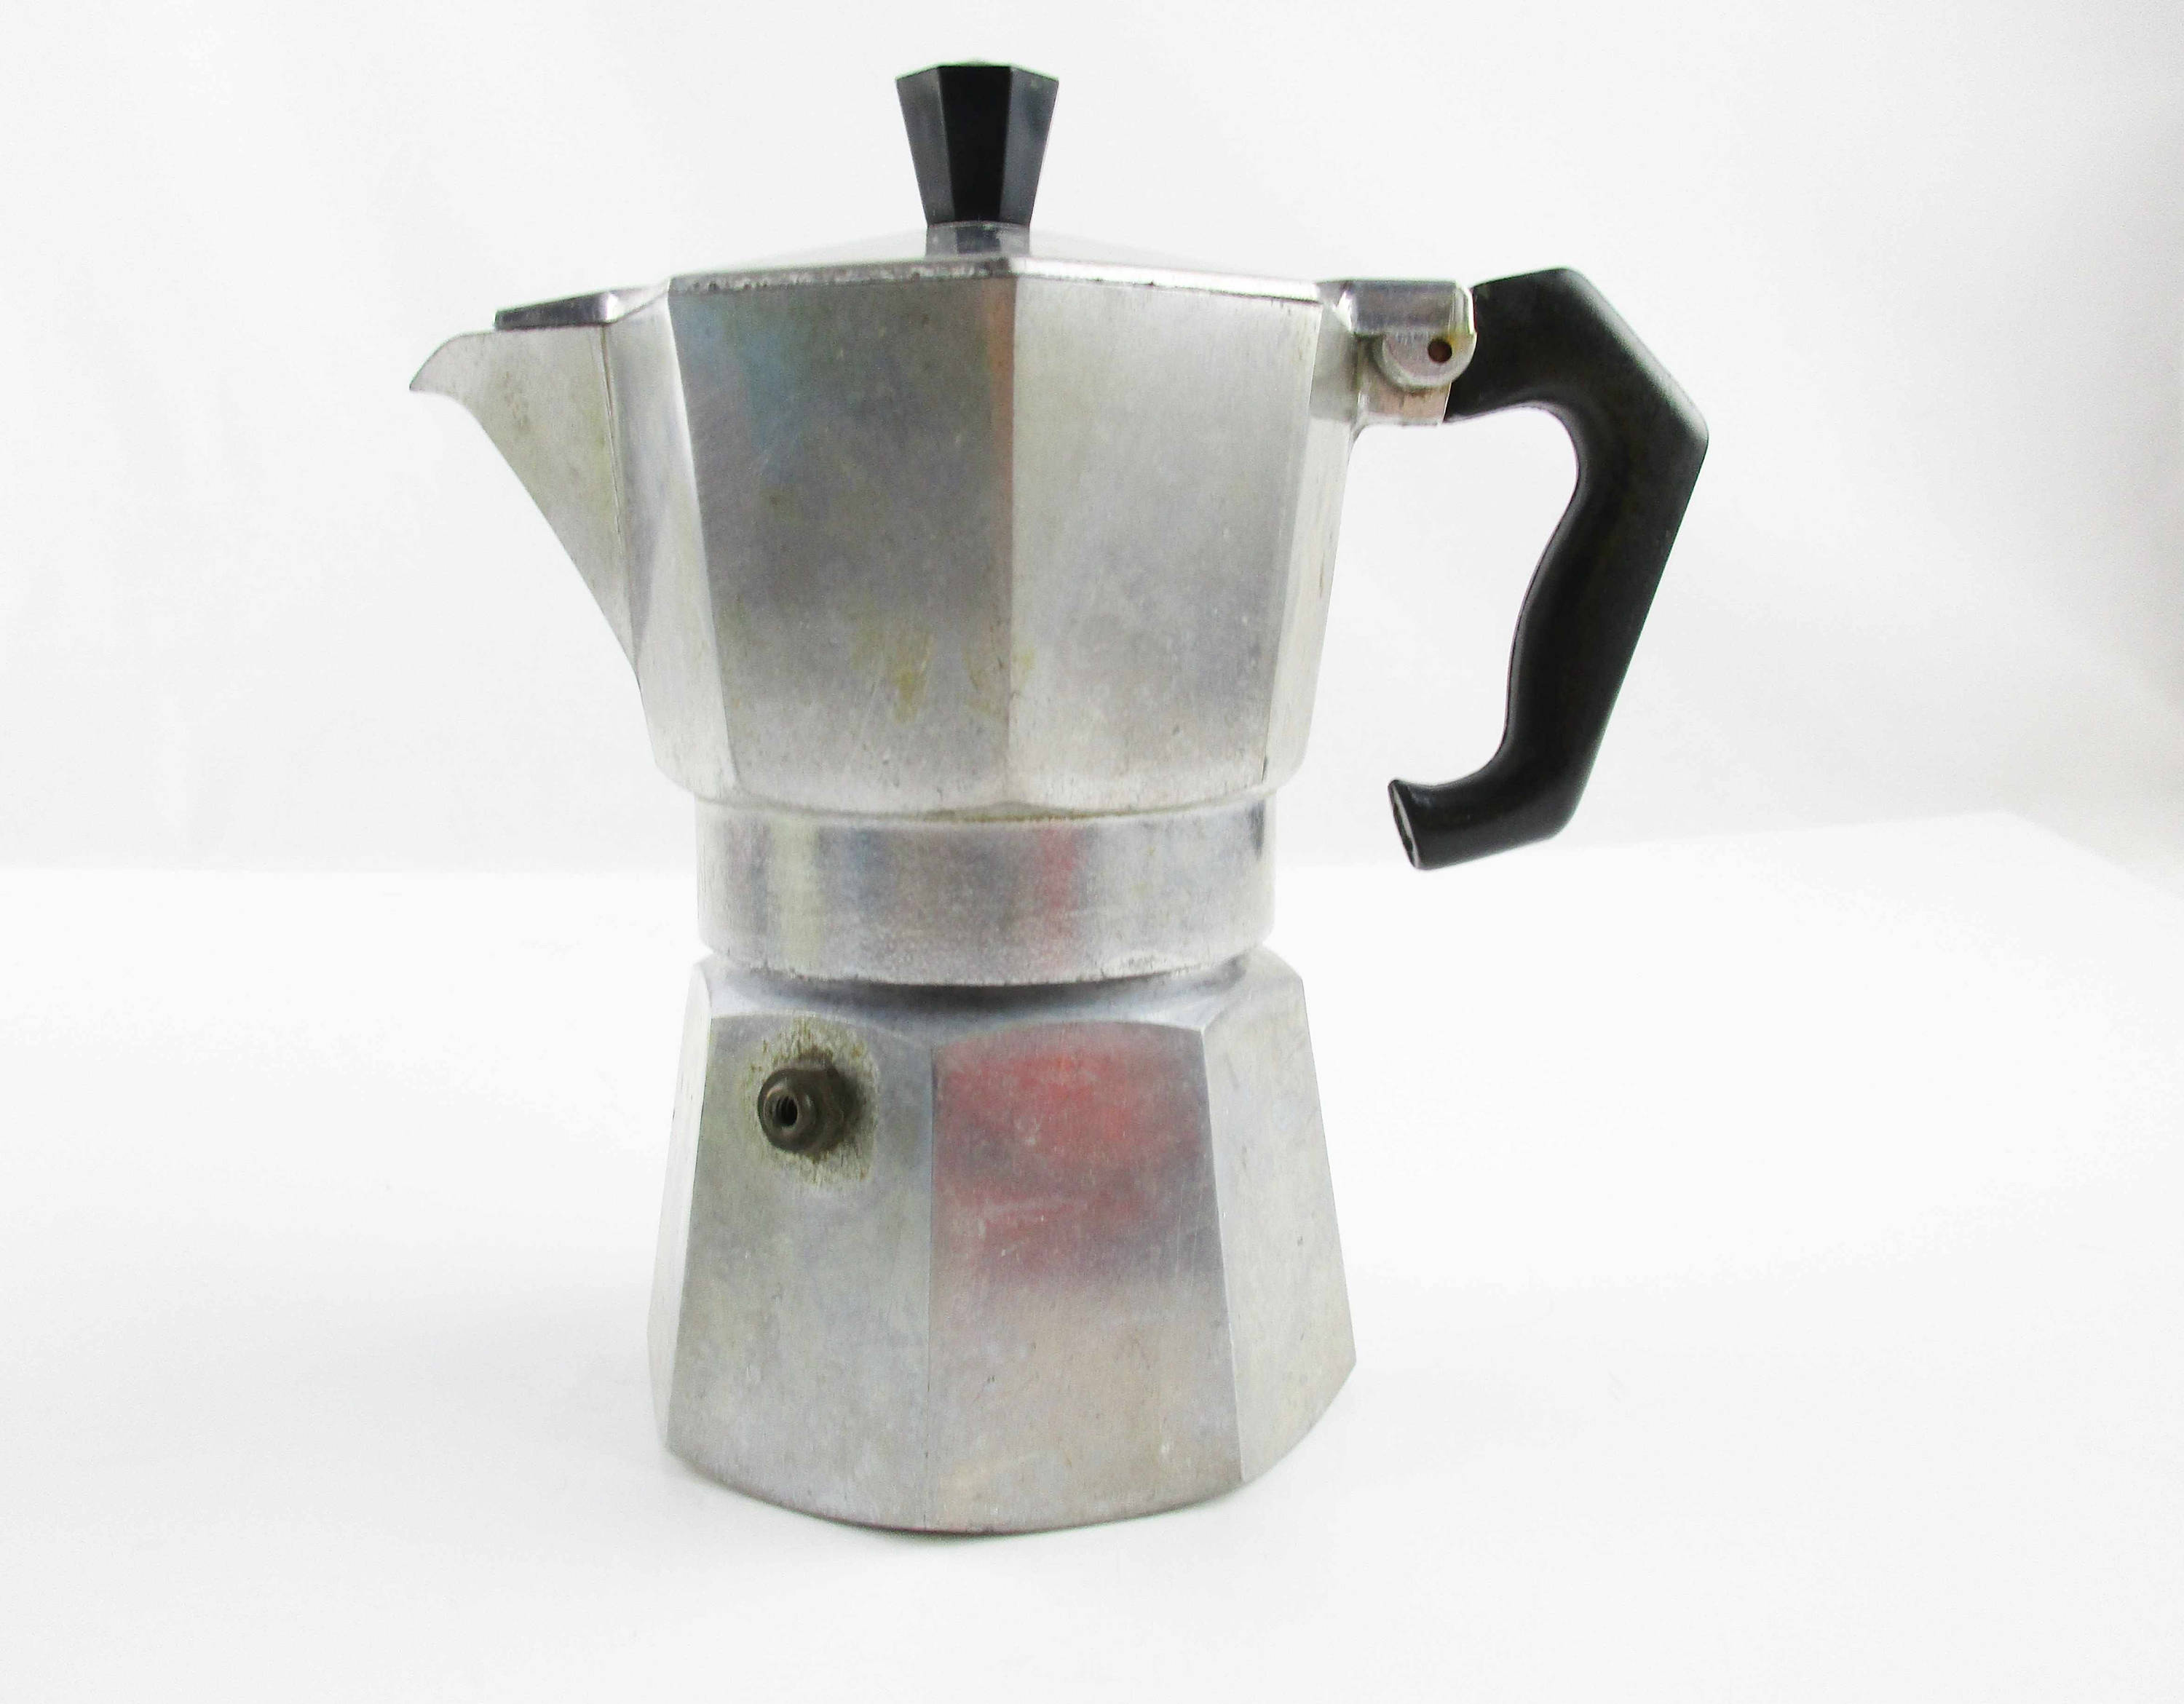 Retro 1940s Stovetop Espresso Maker 'Zanzibar'